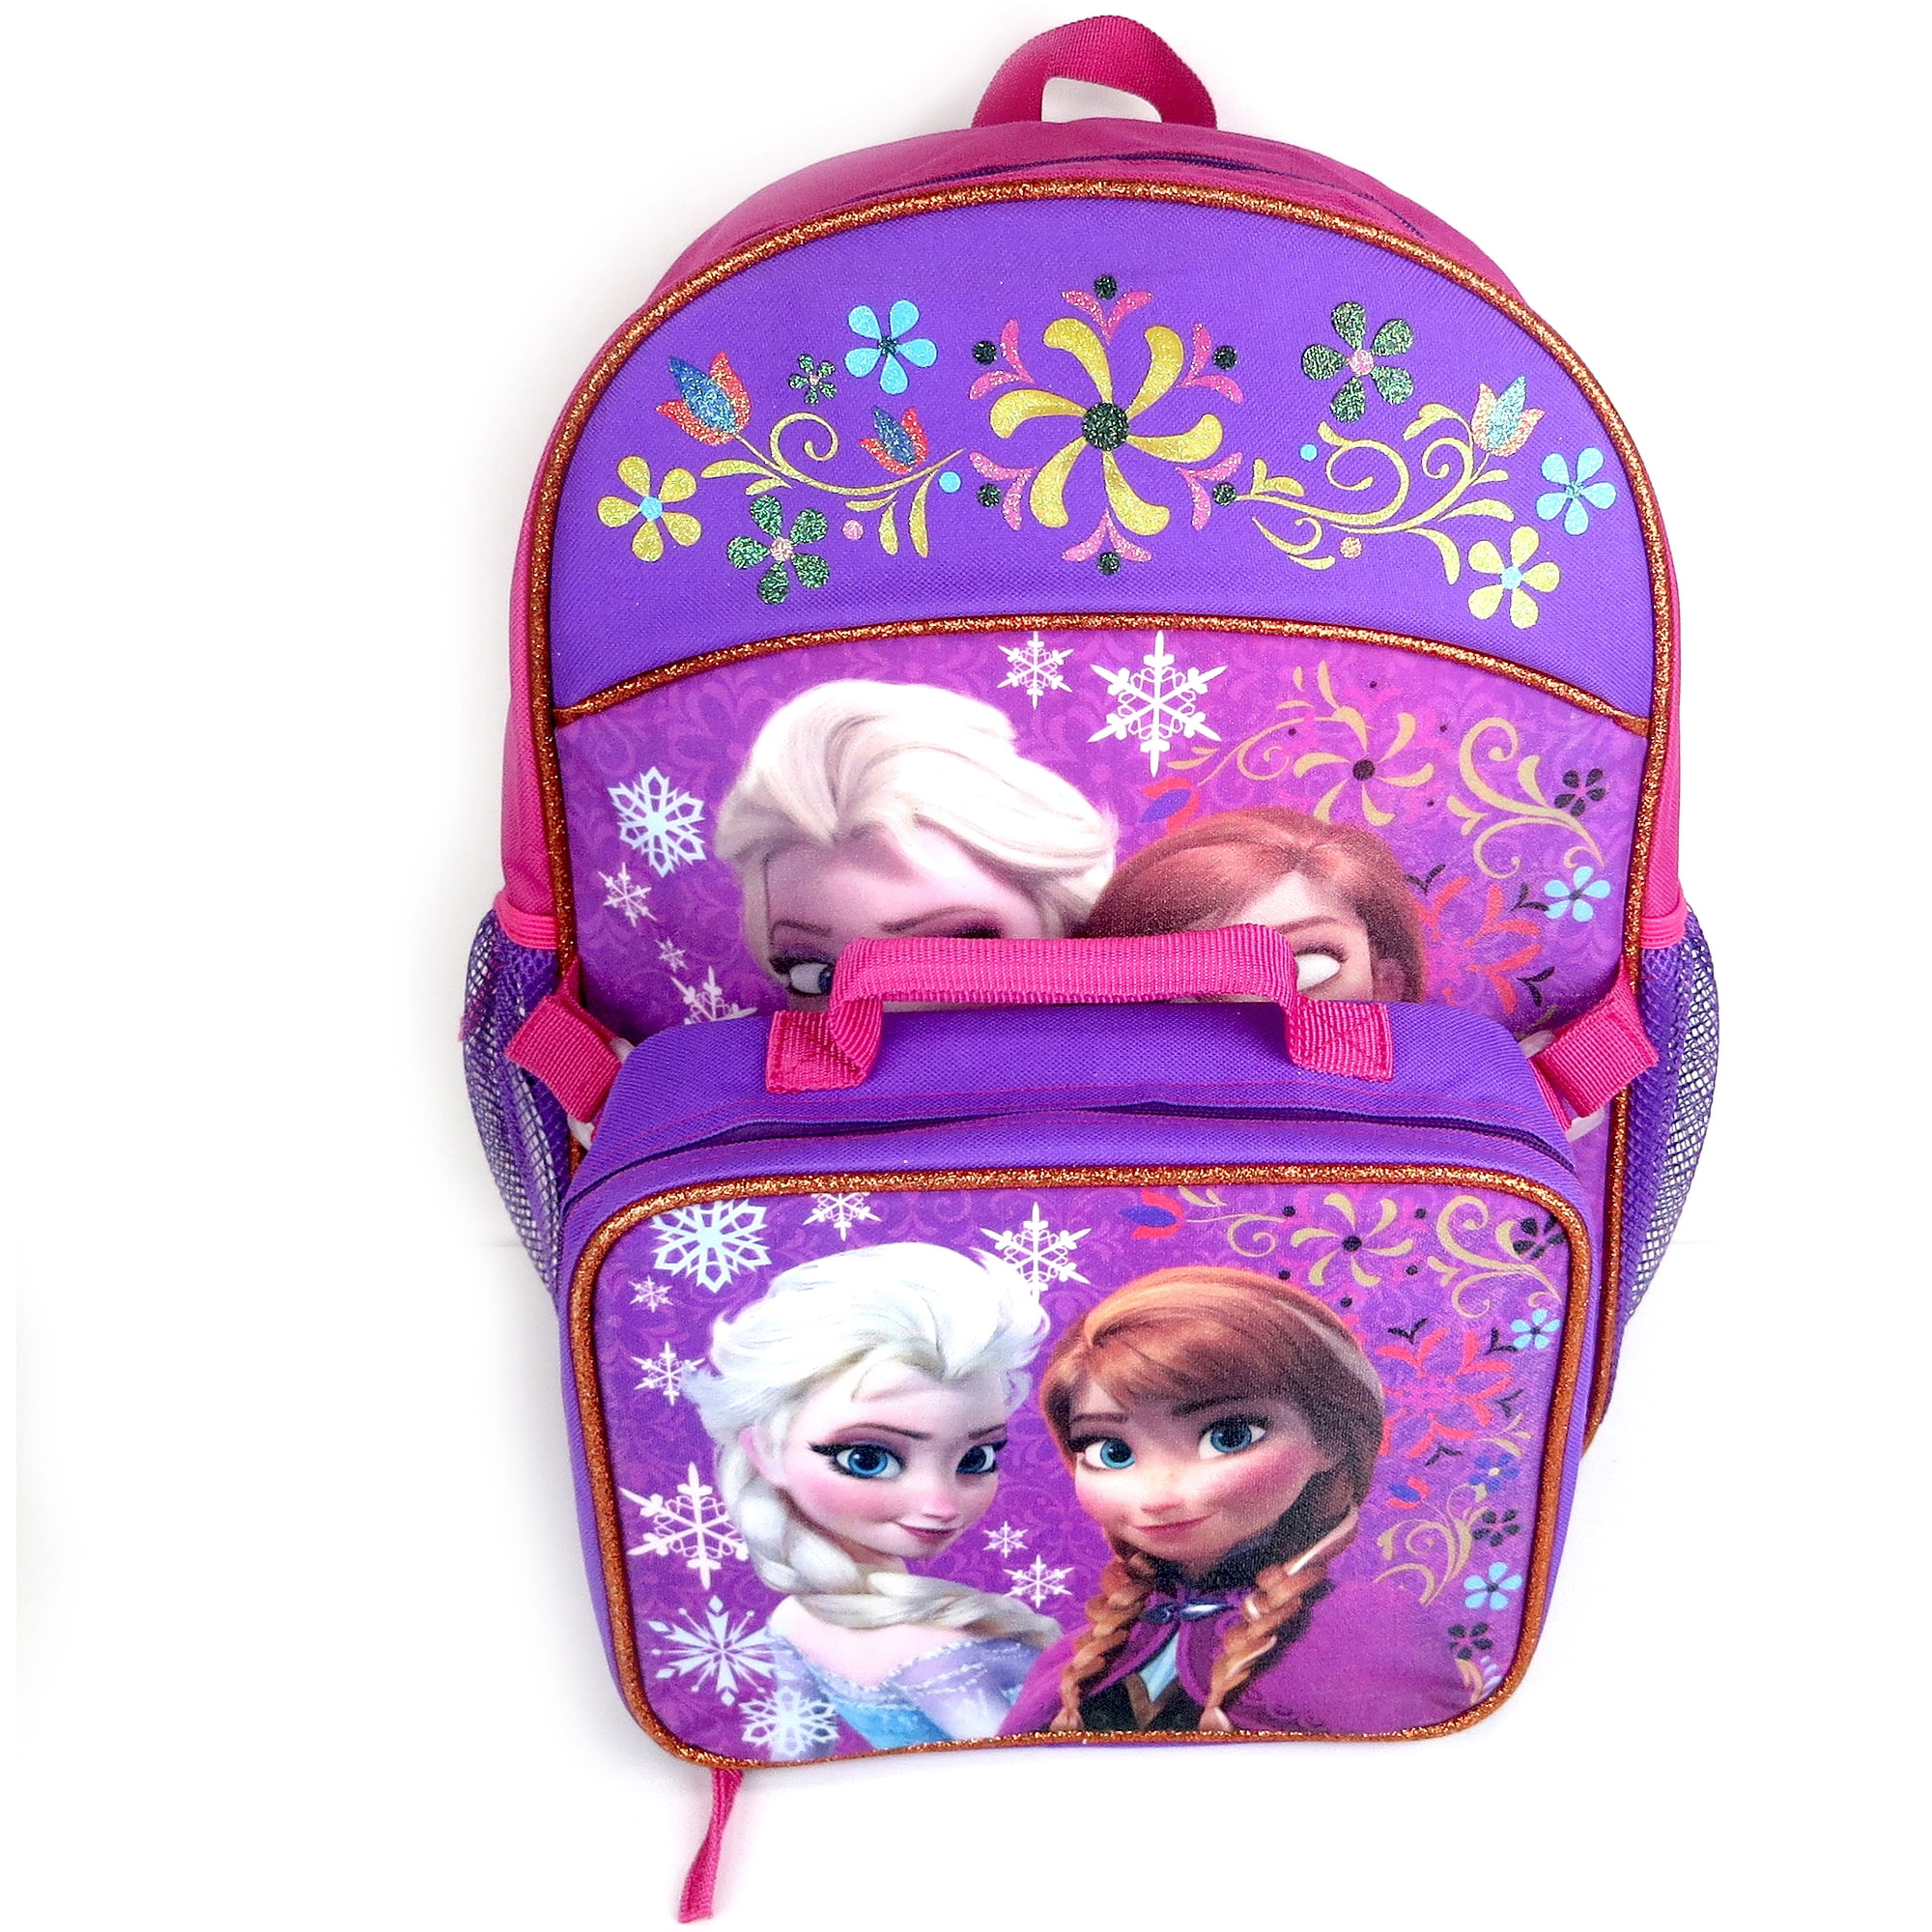 Disney Frozen Anna Elsa Backpack Lunch Tote Combo Kit 3766e36a 880b 45a0 9fc1 4fc069b8c7d7 2.f7d3cbb002920b798593e2d3986057f3